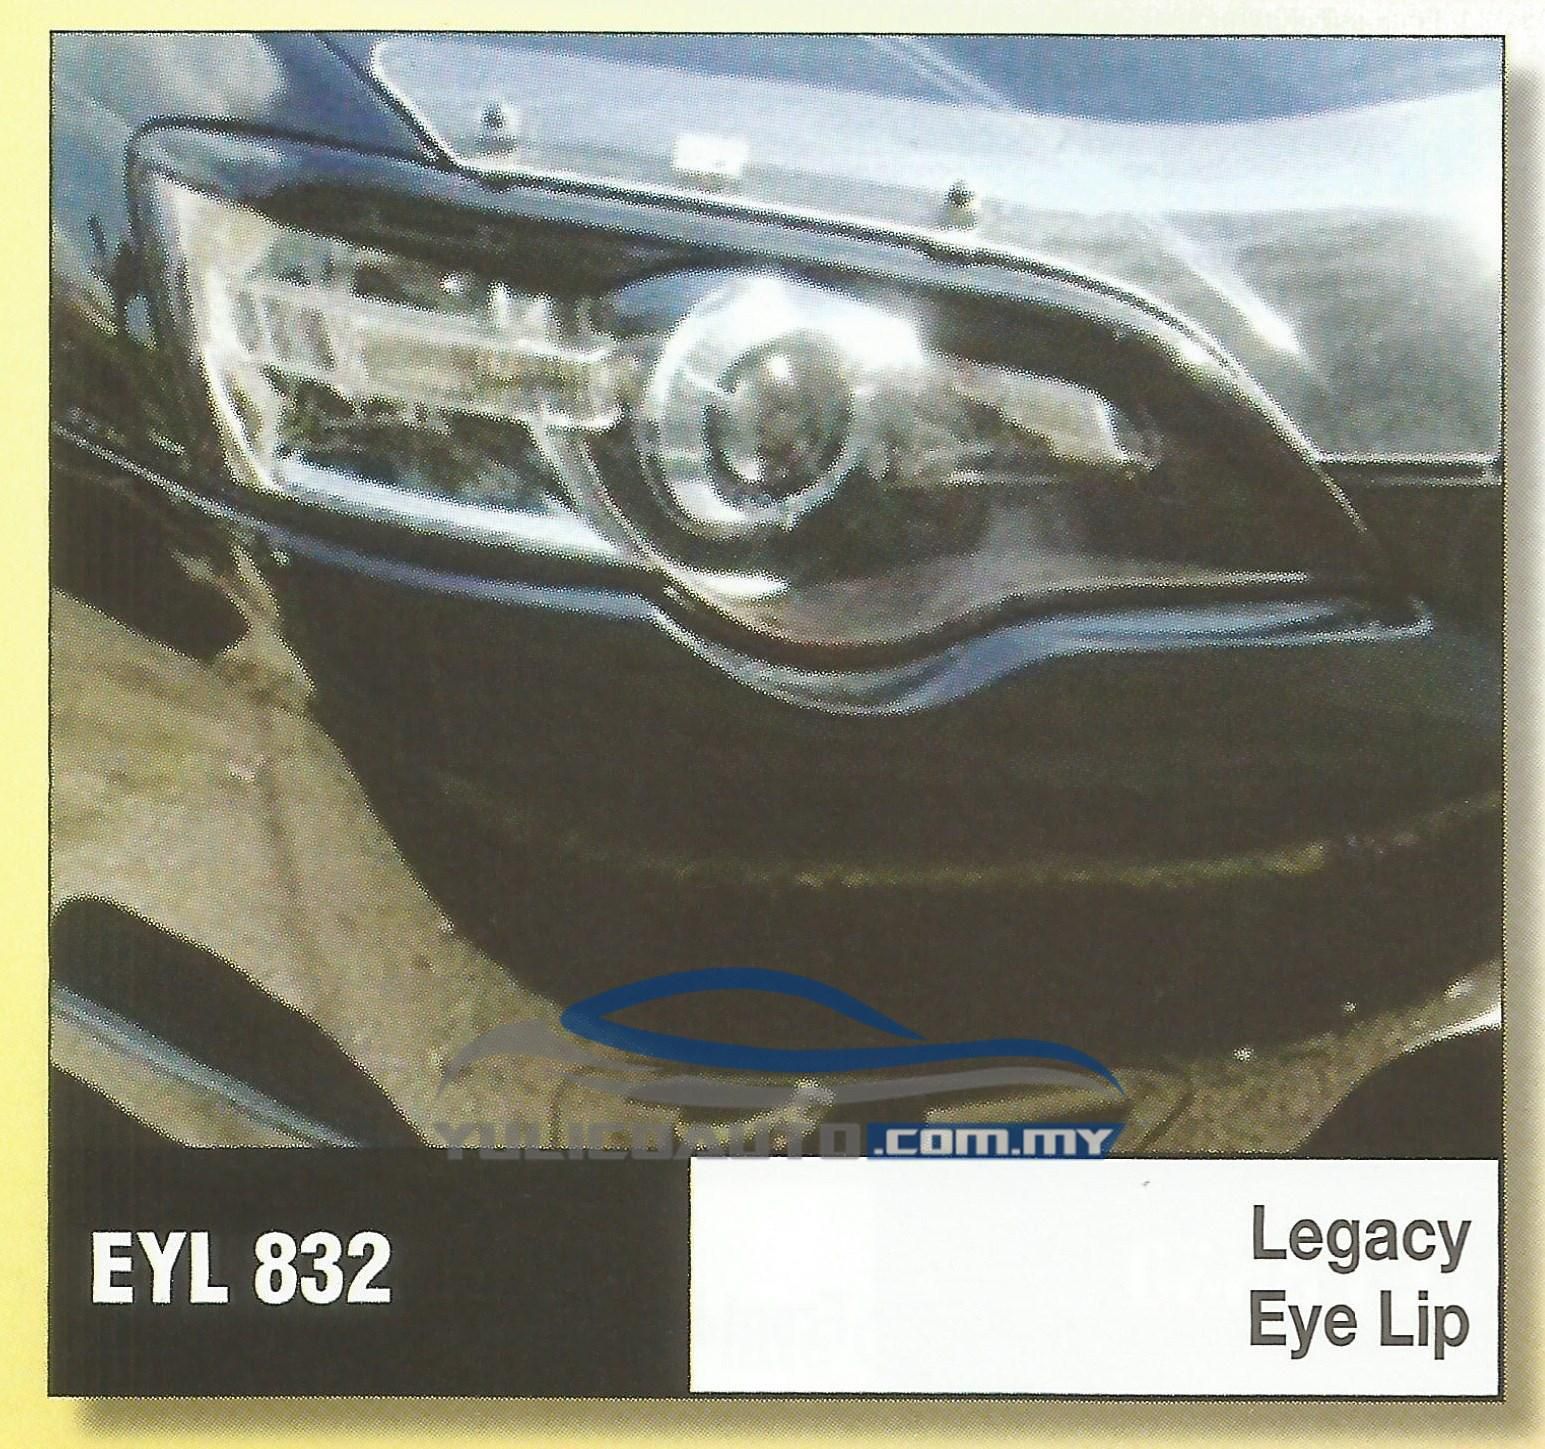 Yulicoauto Subaru Legacy Eye Lip  [FRP]